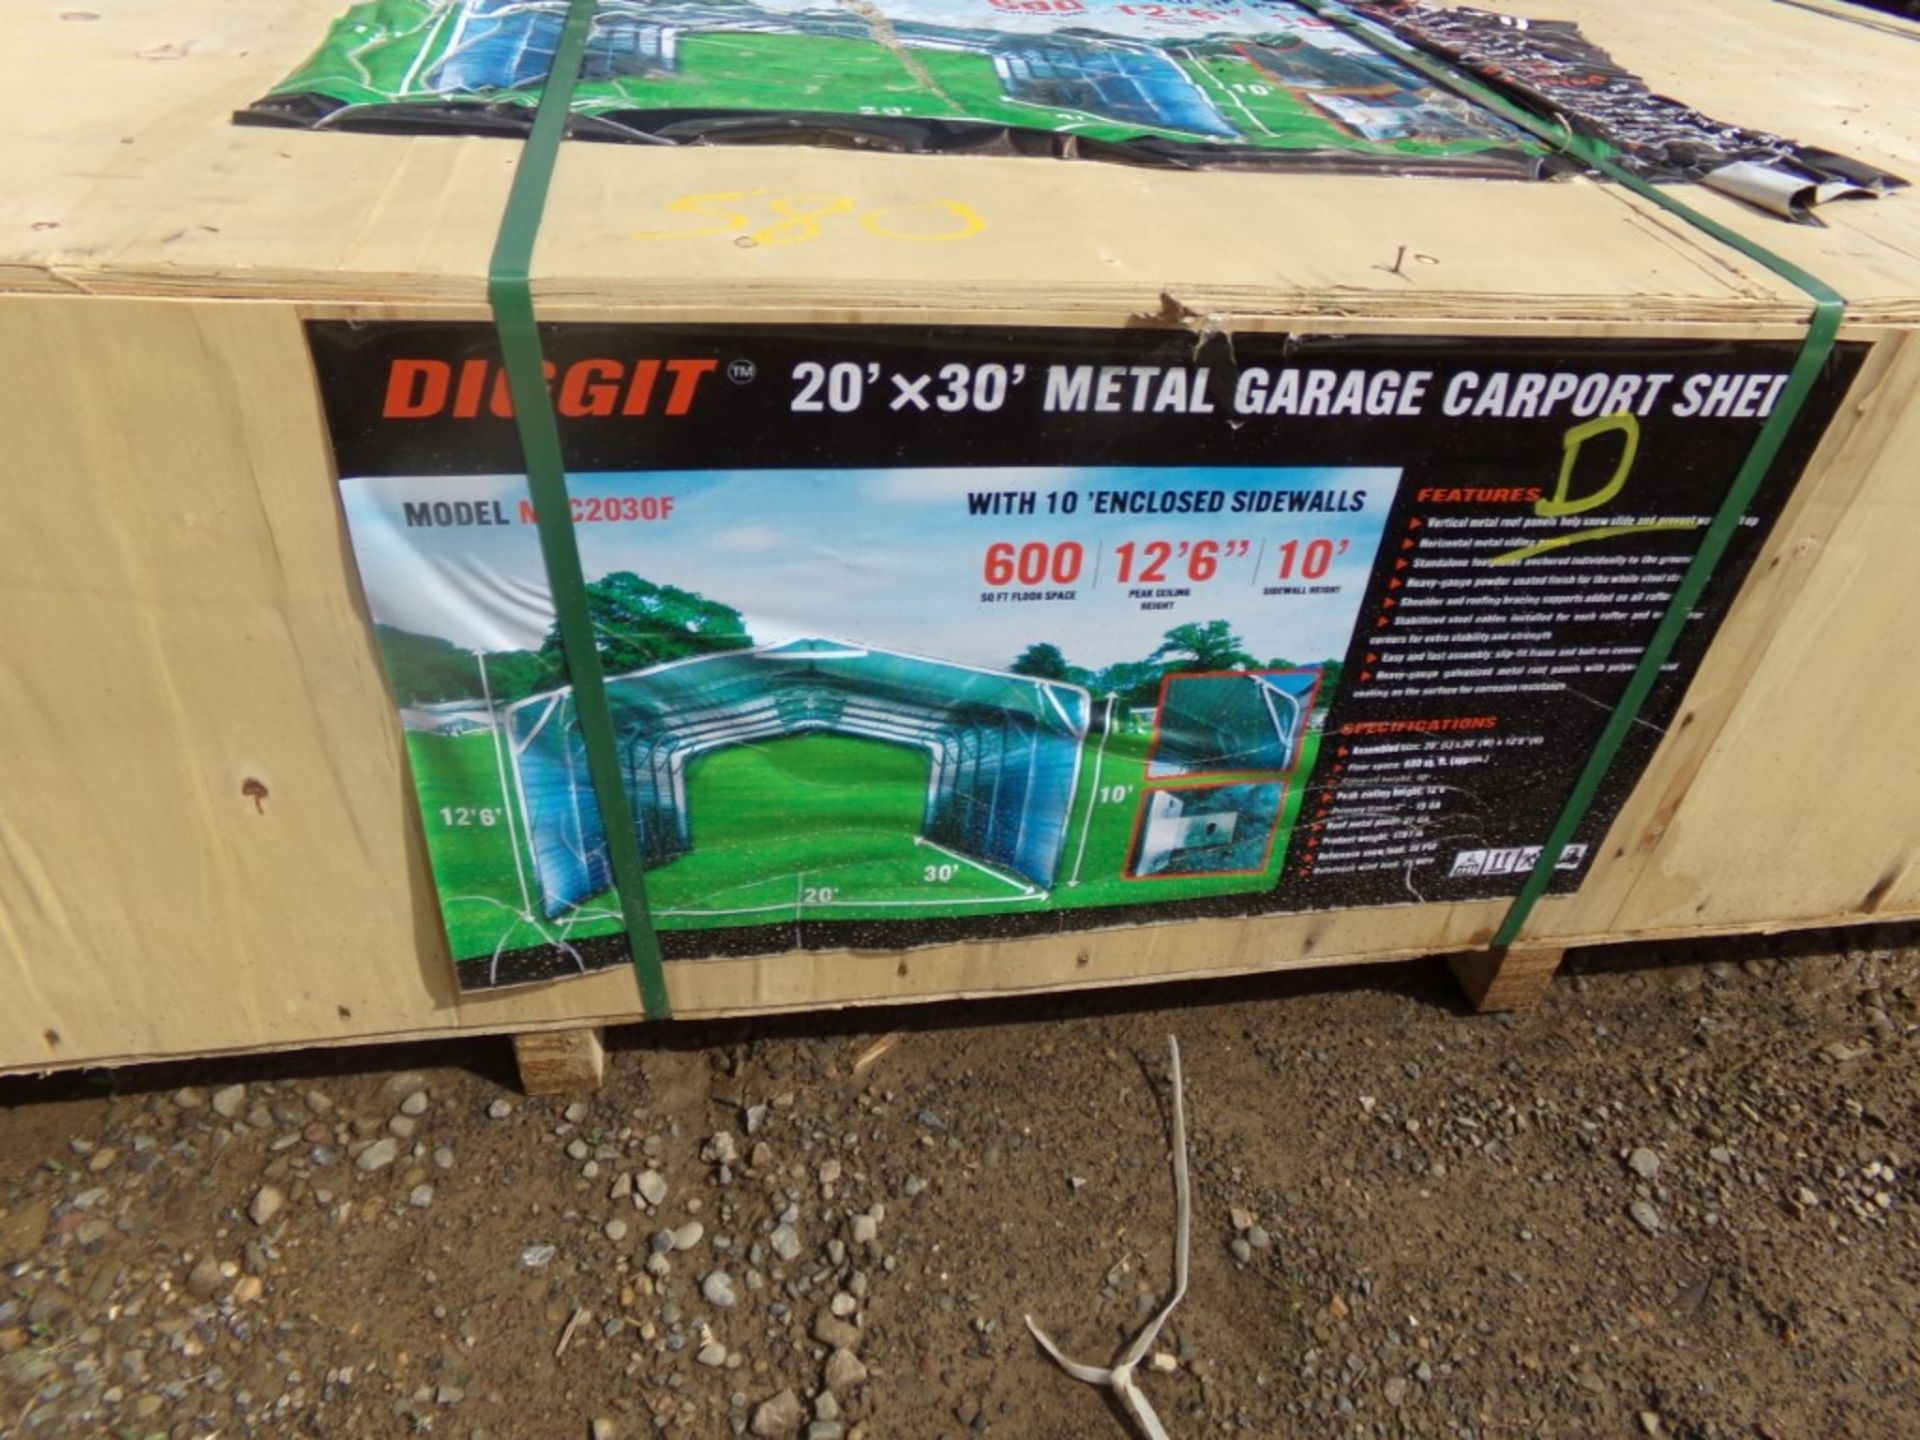 New Diggit 20' x 30' Metal Garage/Carport/Shed with 10' Sidewalls and 12'6'' Center - Bild 2 aus 2